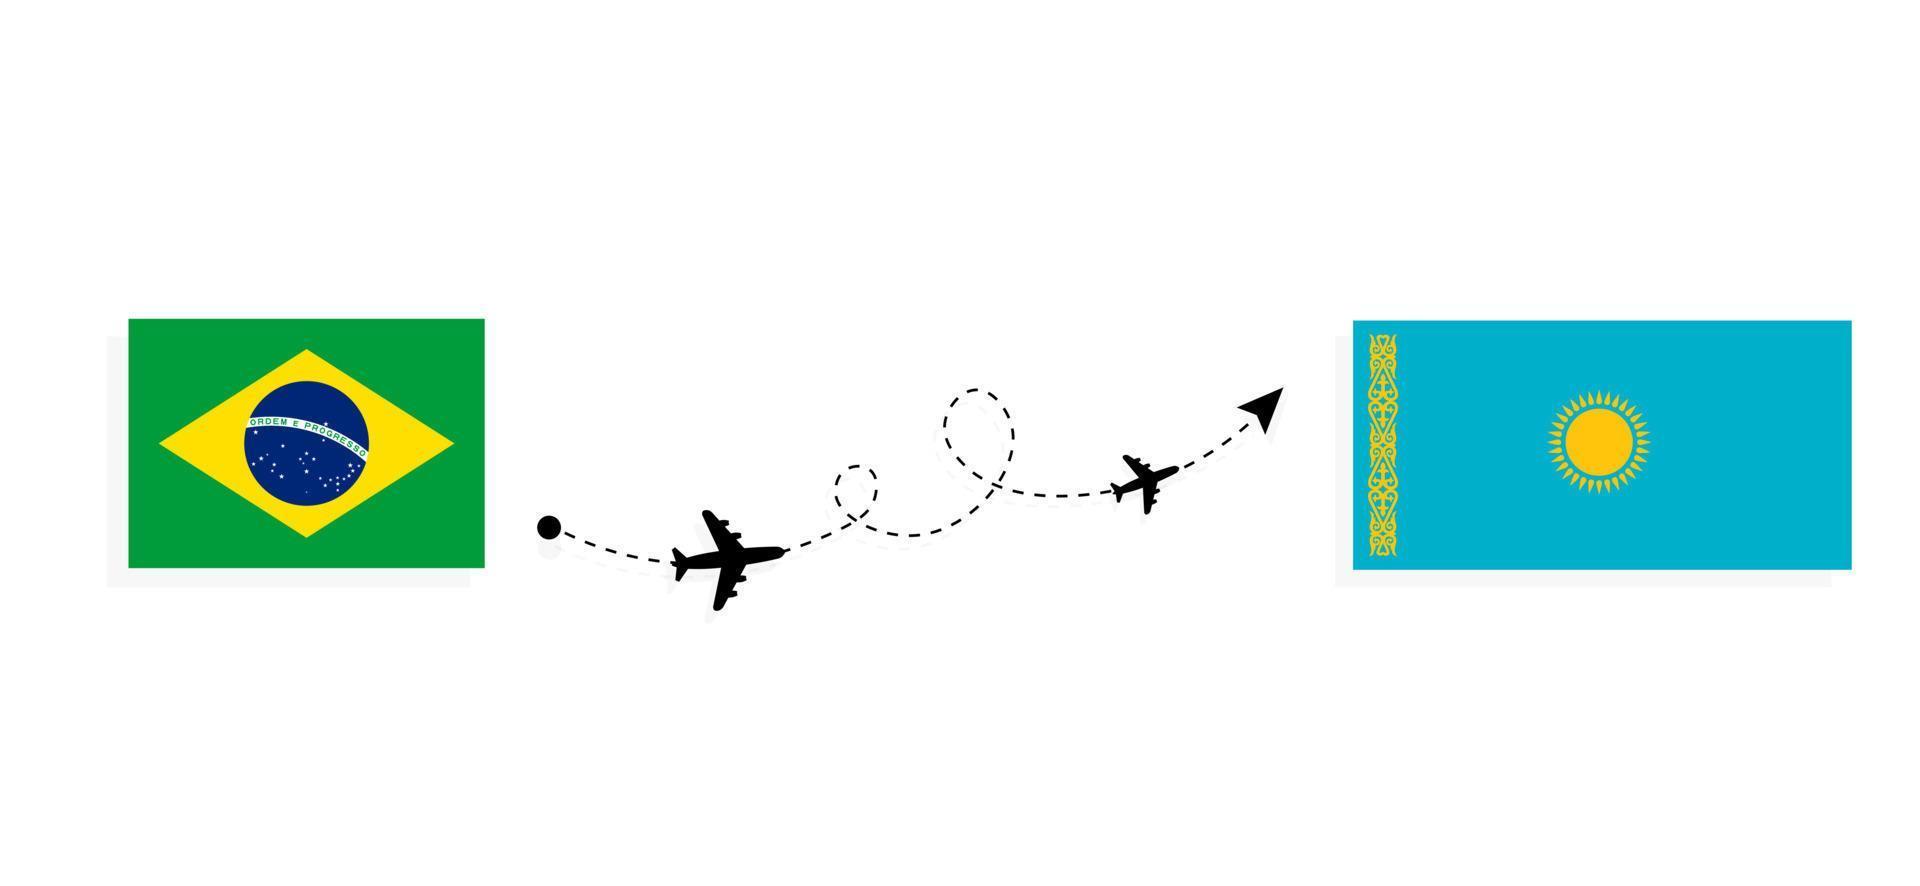 vuelo y viaje desde brasil a kazajstán en avión de pasajeros concepto de viaje vector